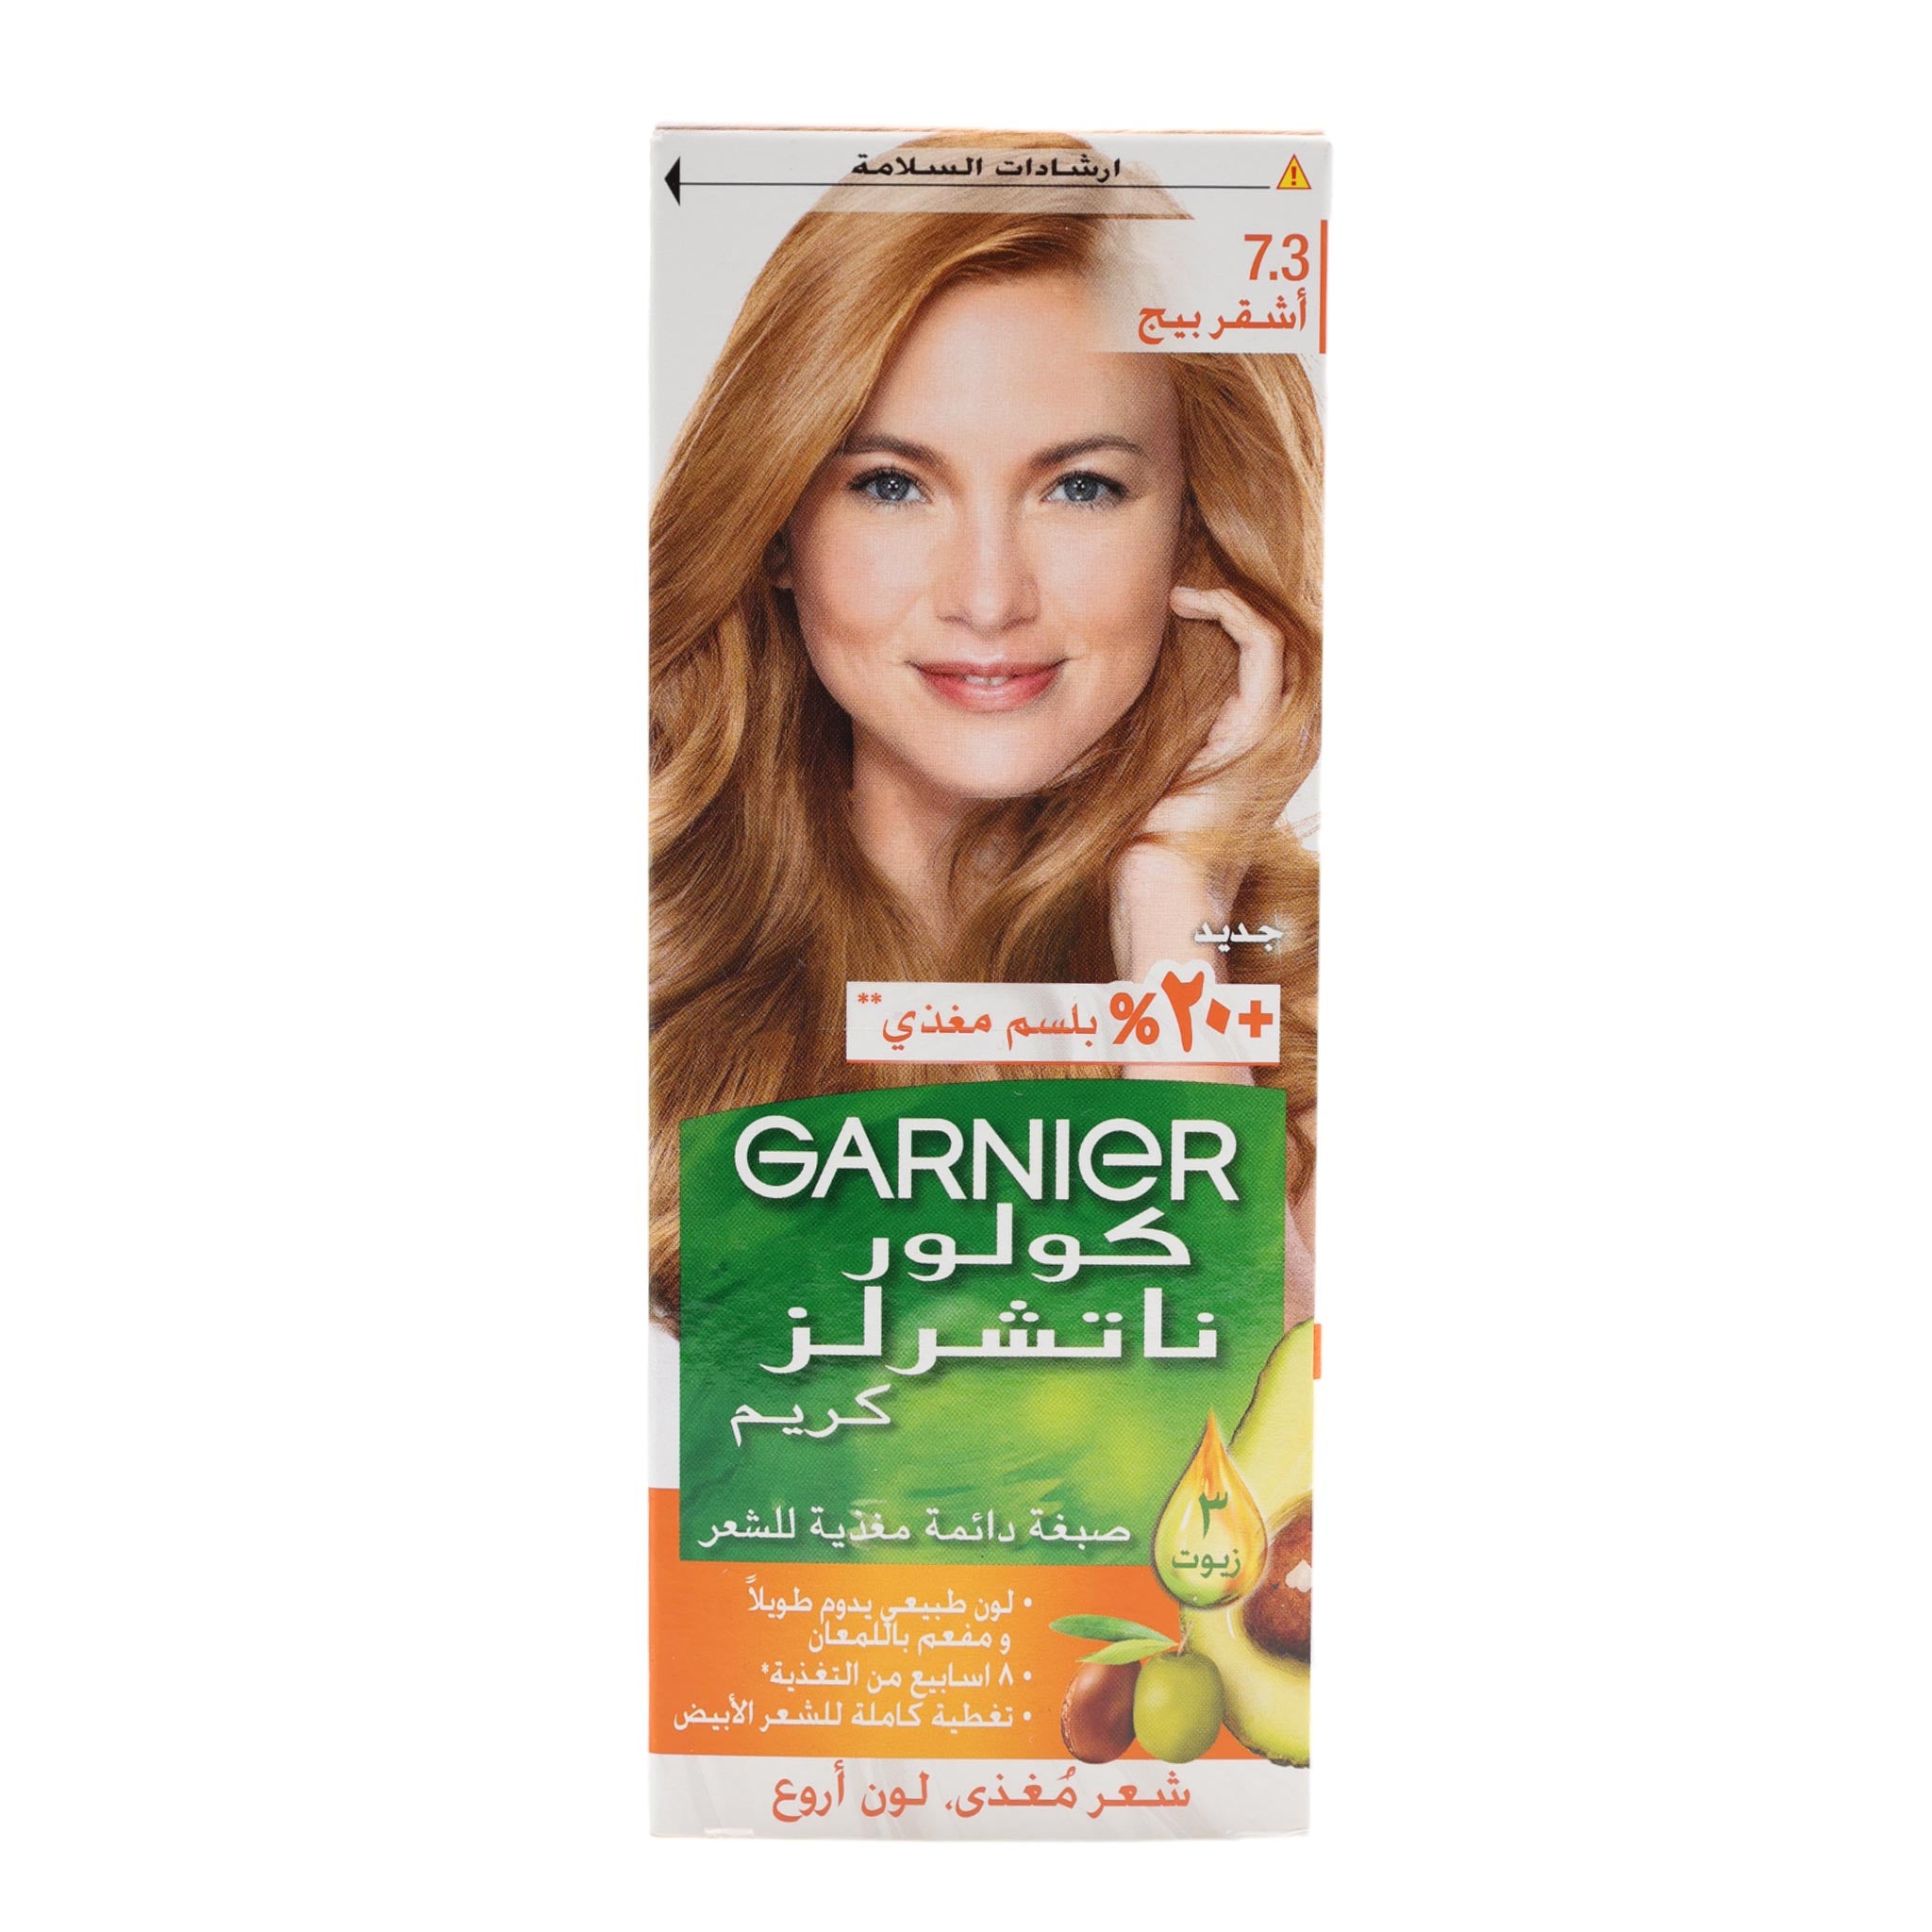 GARNIER Nourishing Permanent Hair Color 7.3